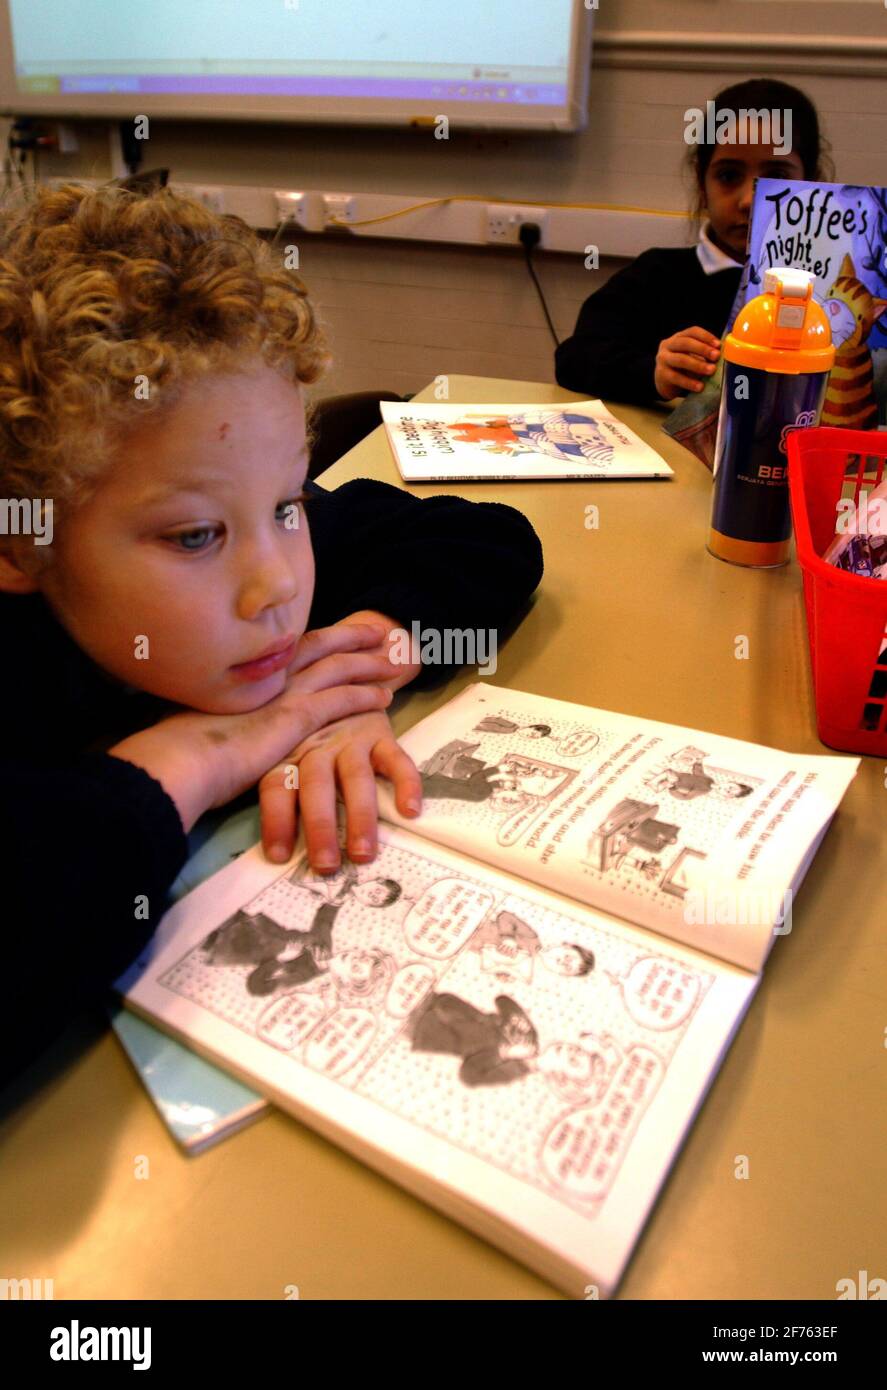 READING AT LORDSHIP LANE SCHOOL.7/11/05 TOM PILSTON Stock Photo